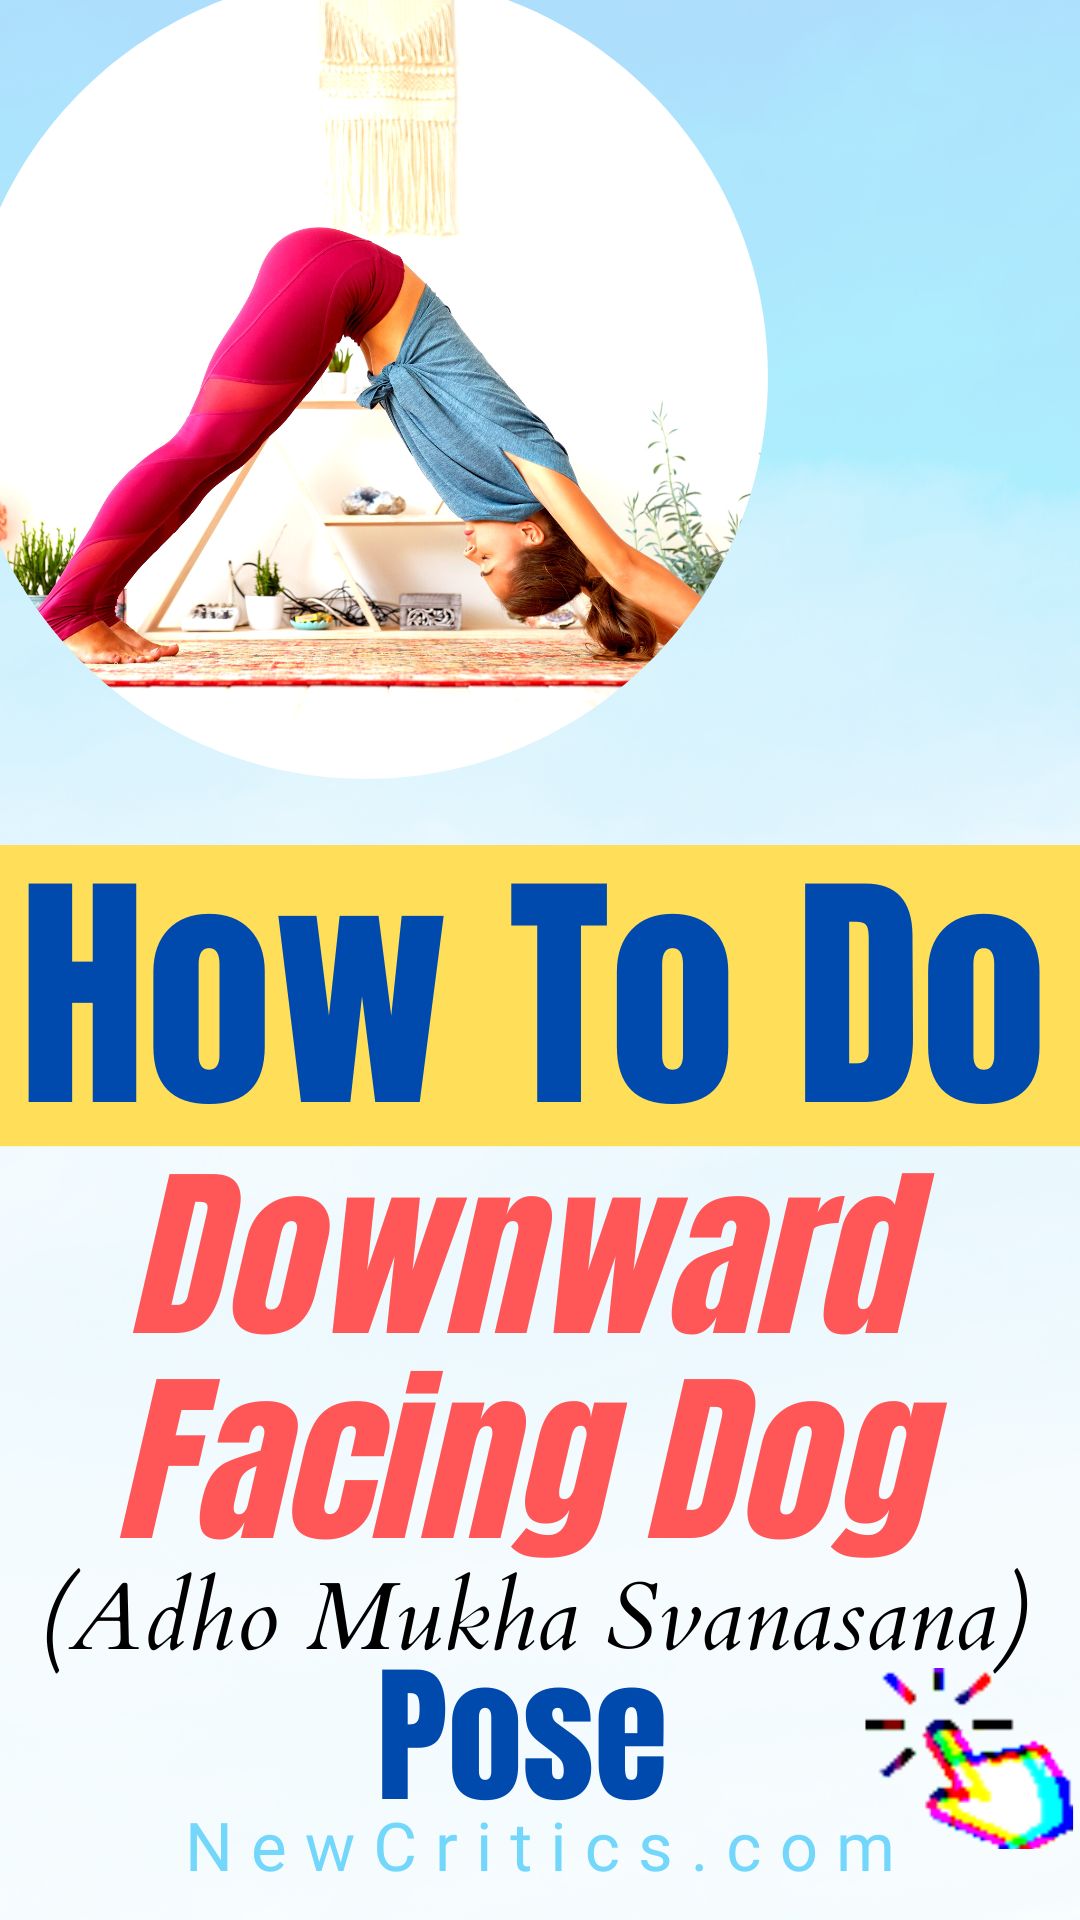 Downward Facing Dog Yoga / Canva